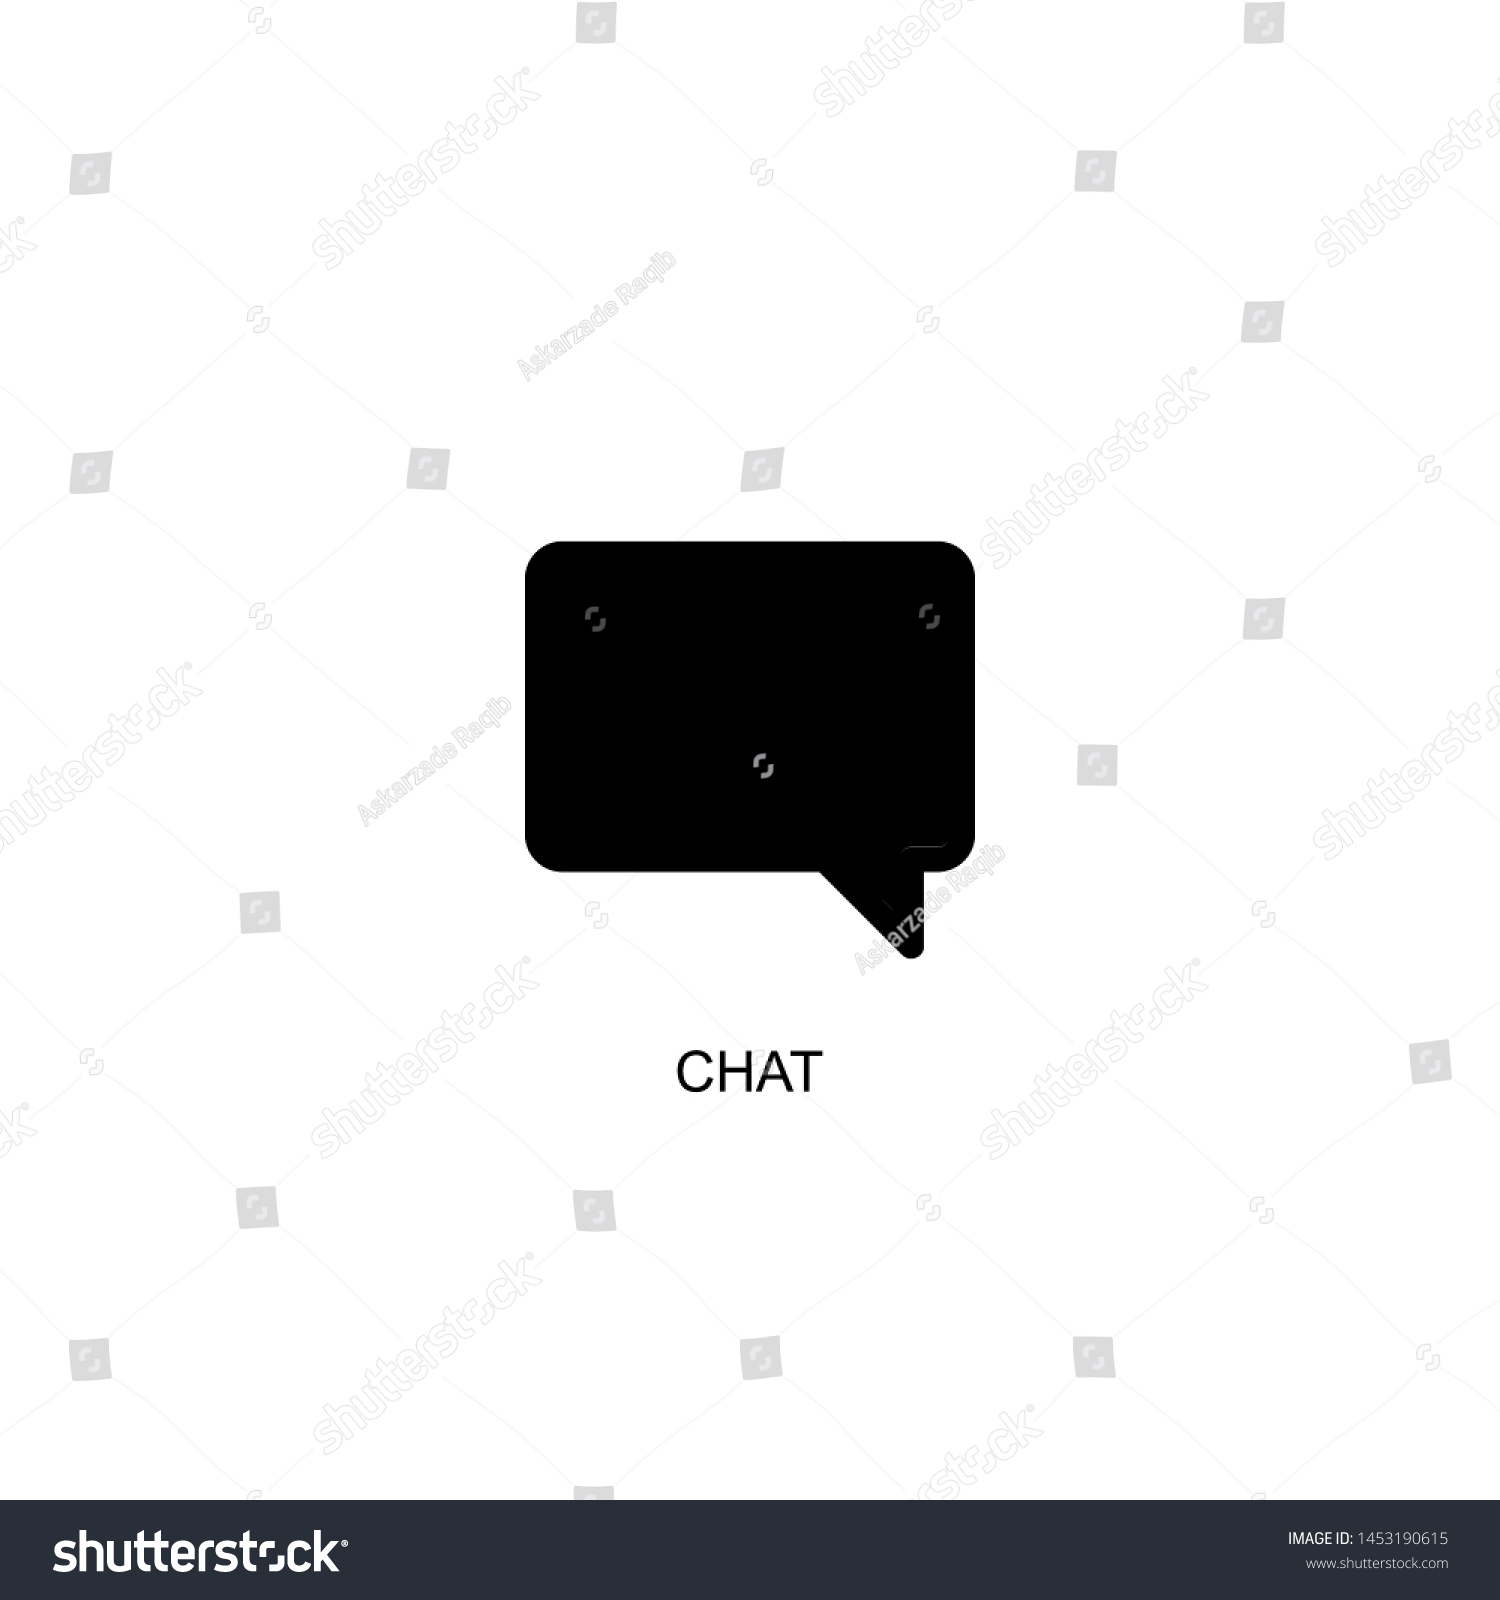 Rad chat